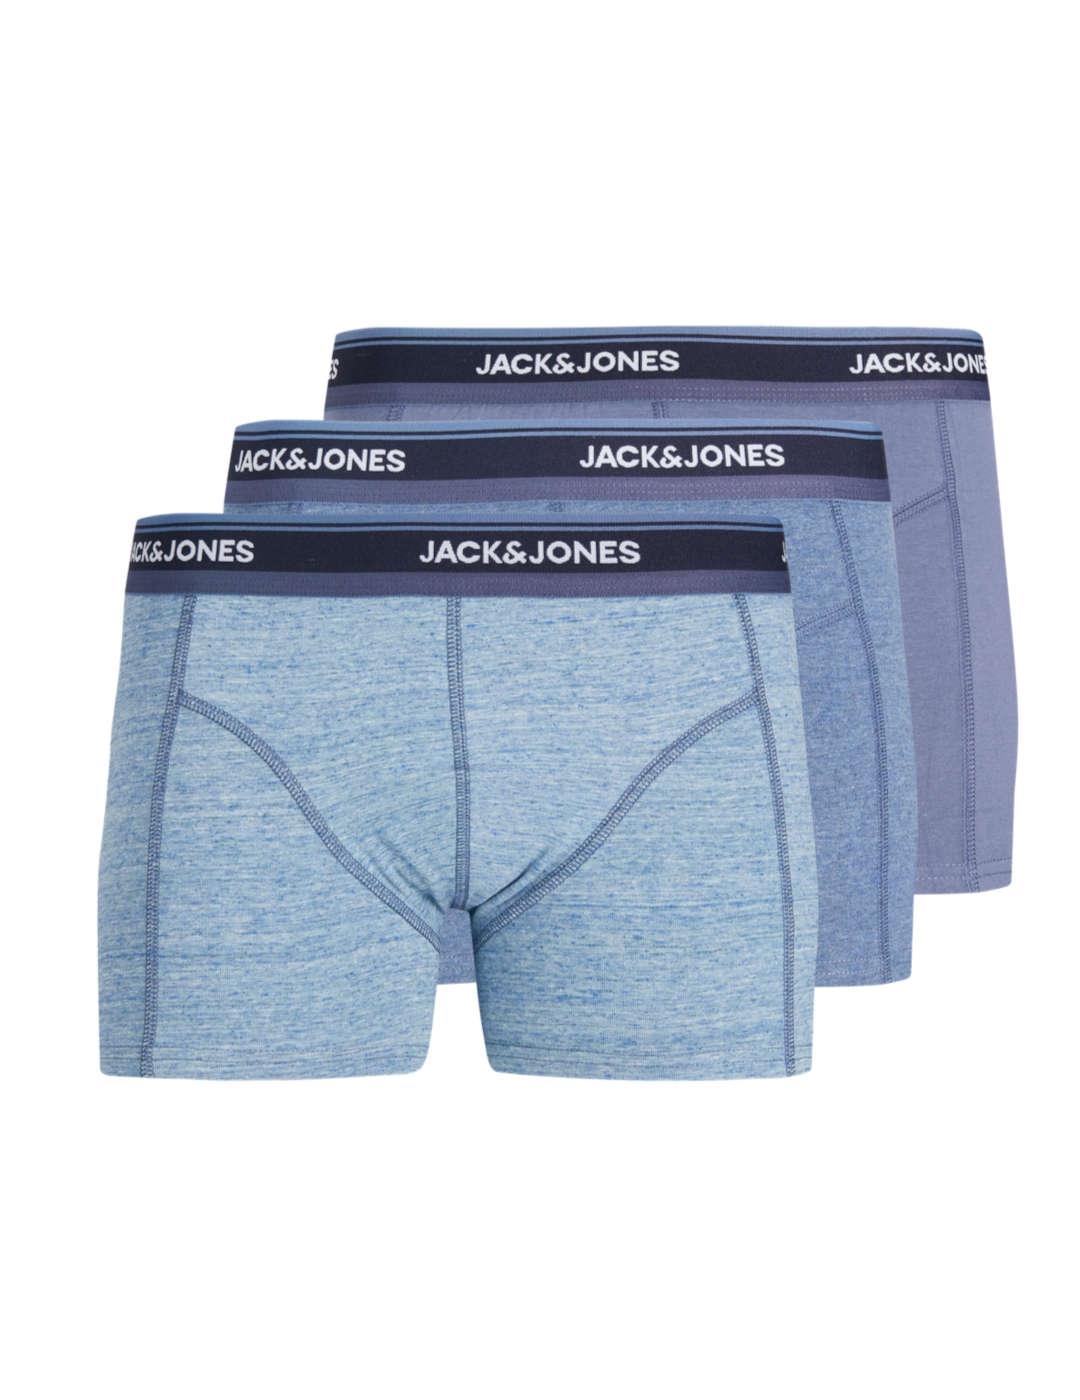 Intimo Jack&Jones pack3 trunk azul para hombre